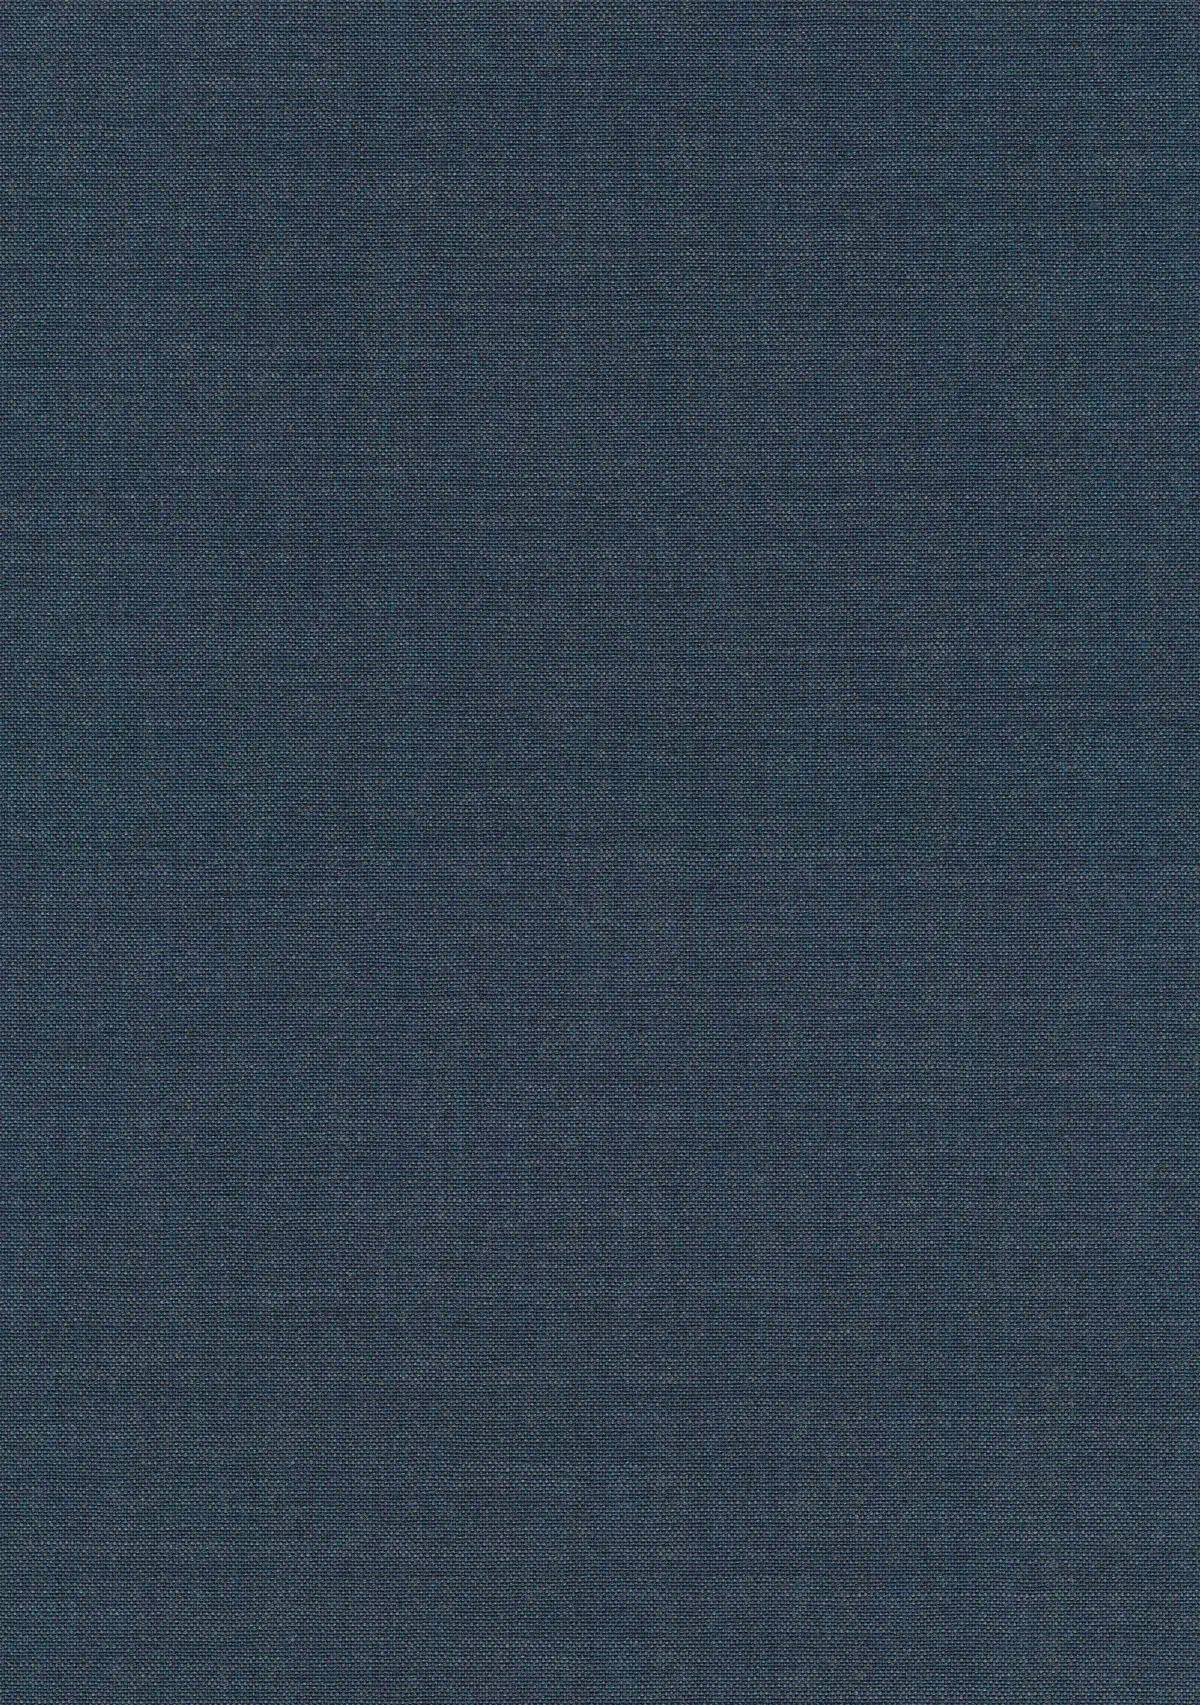 Fabric sample Remix 3 836 blue